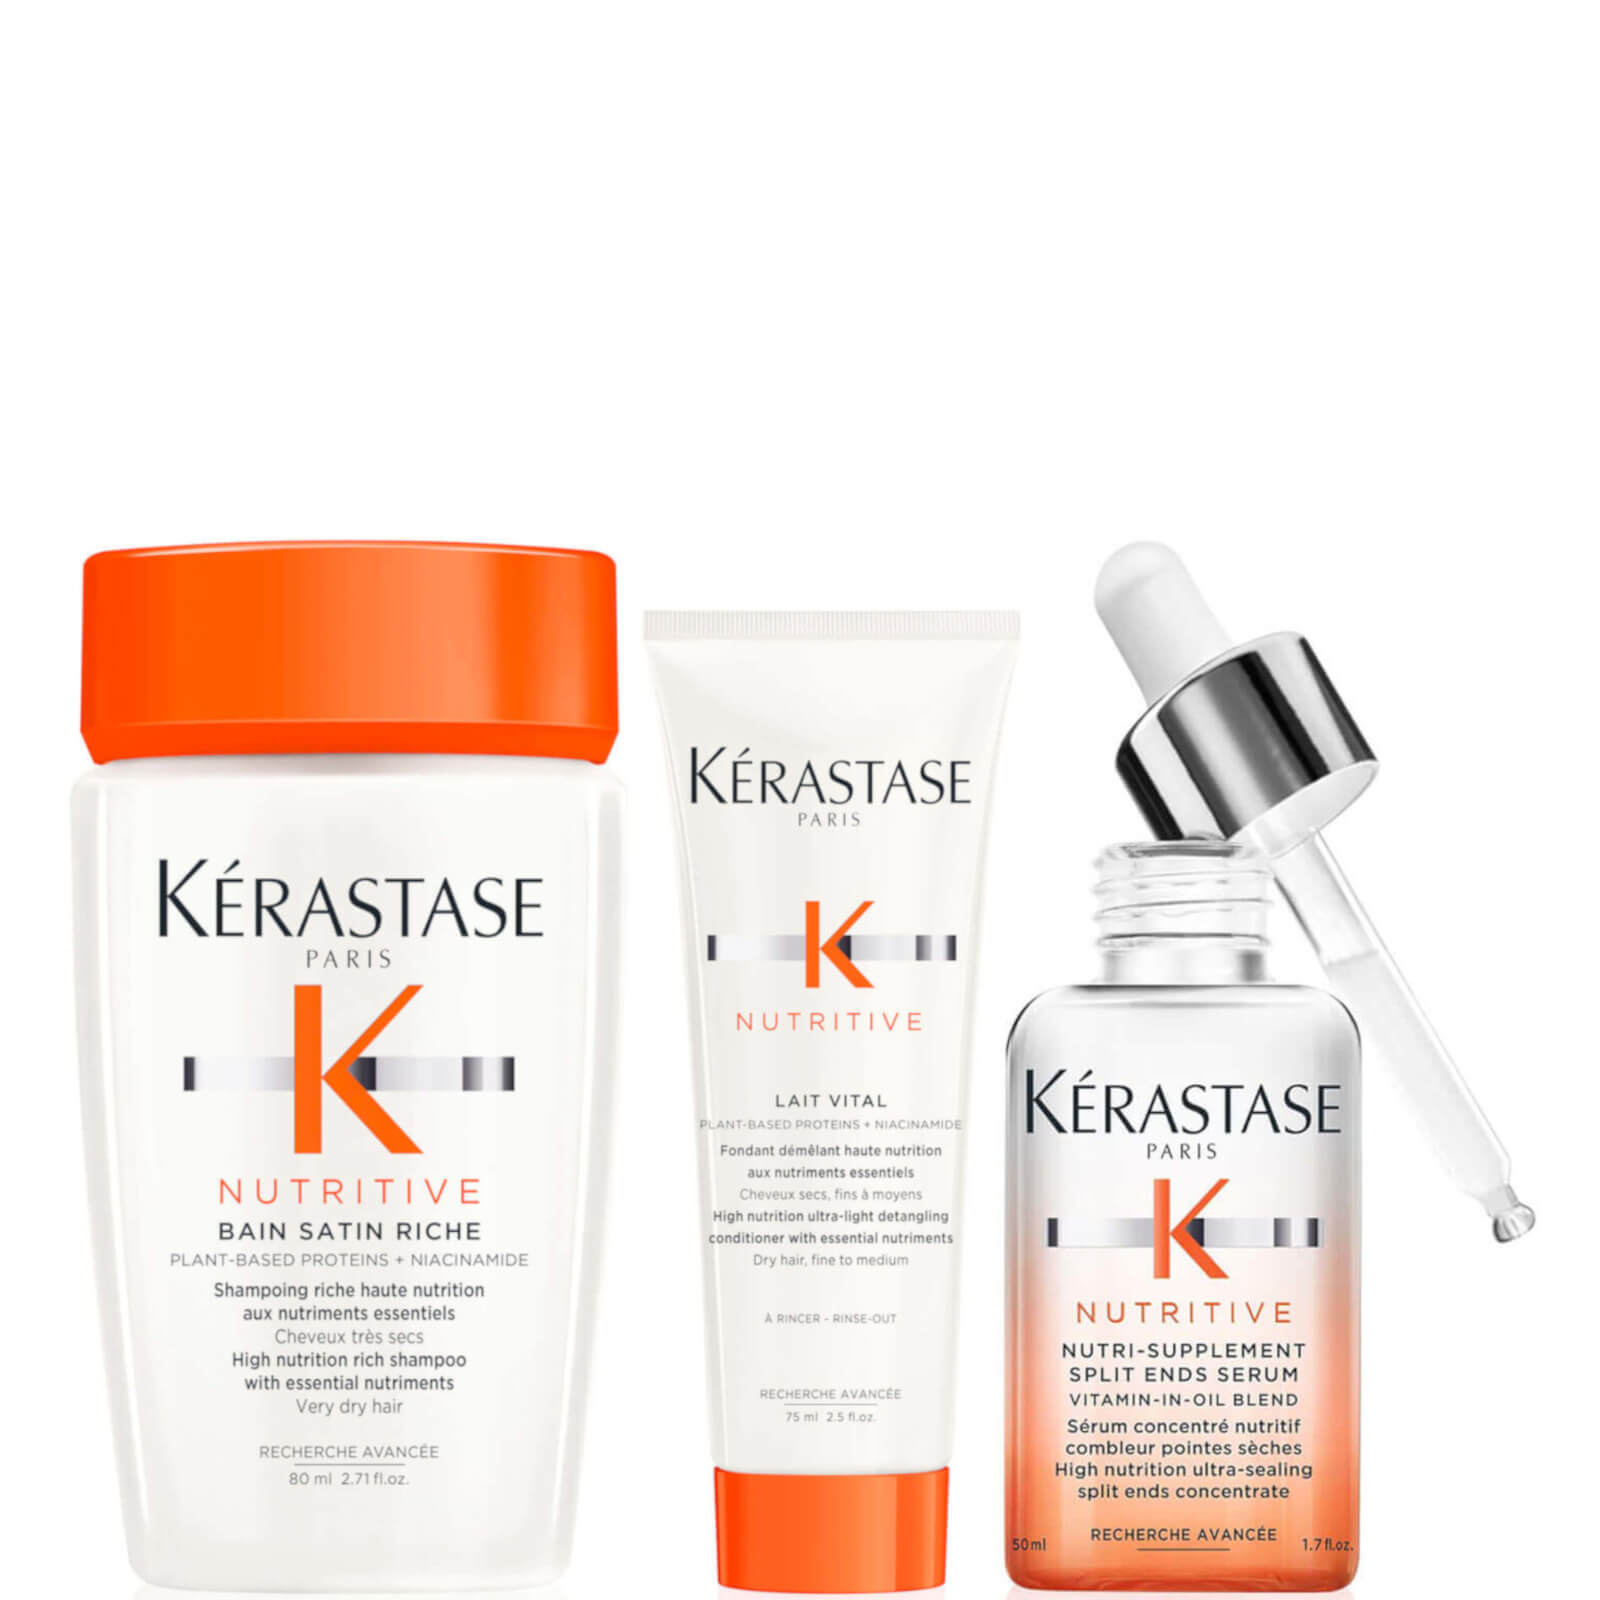 Kerastase Nutritive Nutri-Supplement Split Ends Serum For Dry Hair and Split Ends 50ml with Travel S